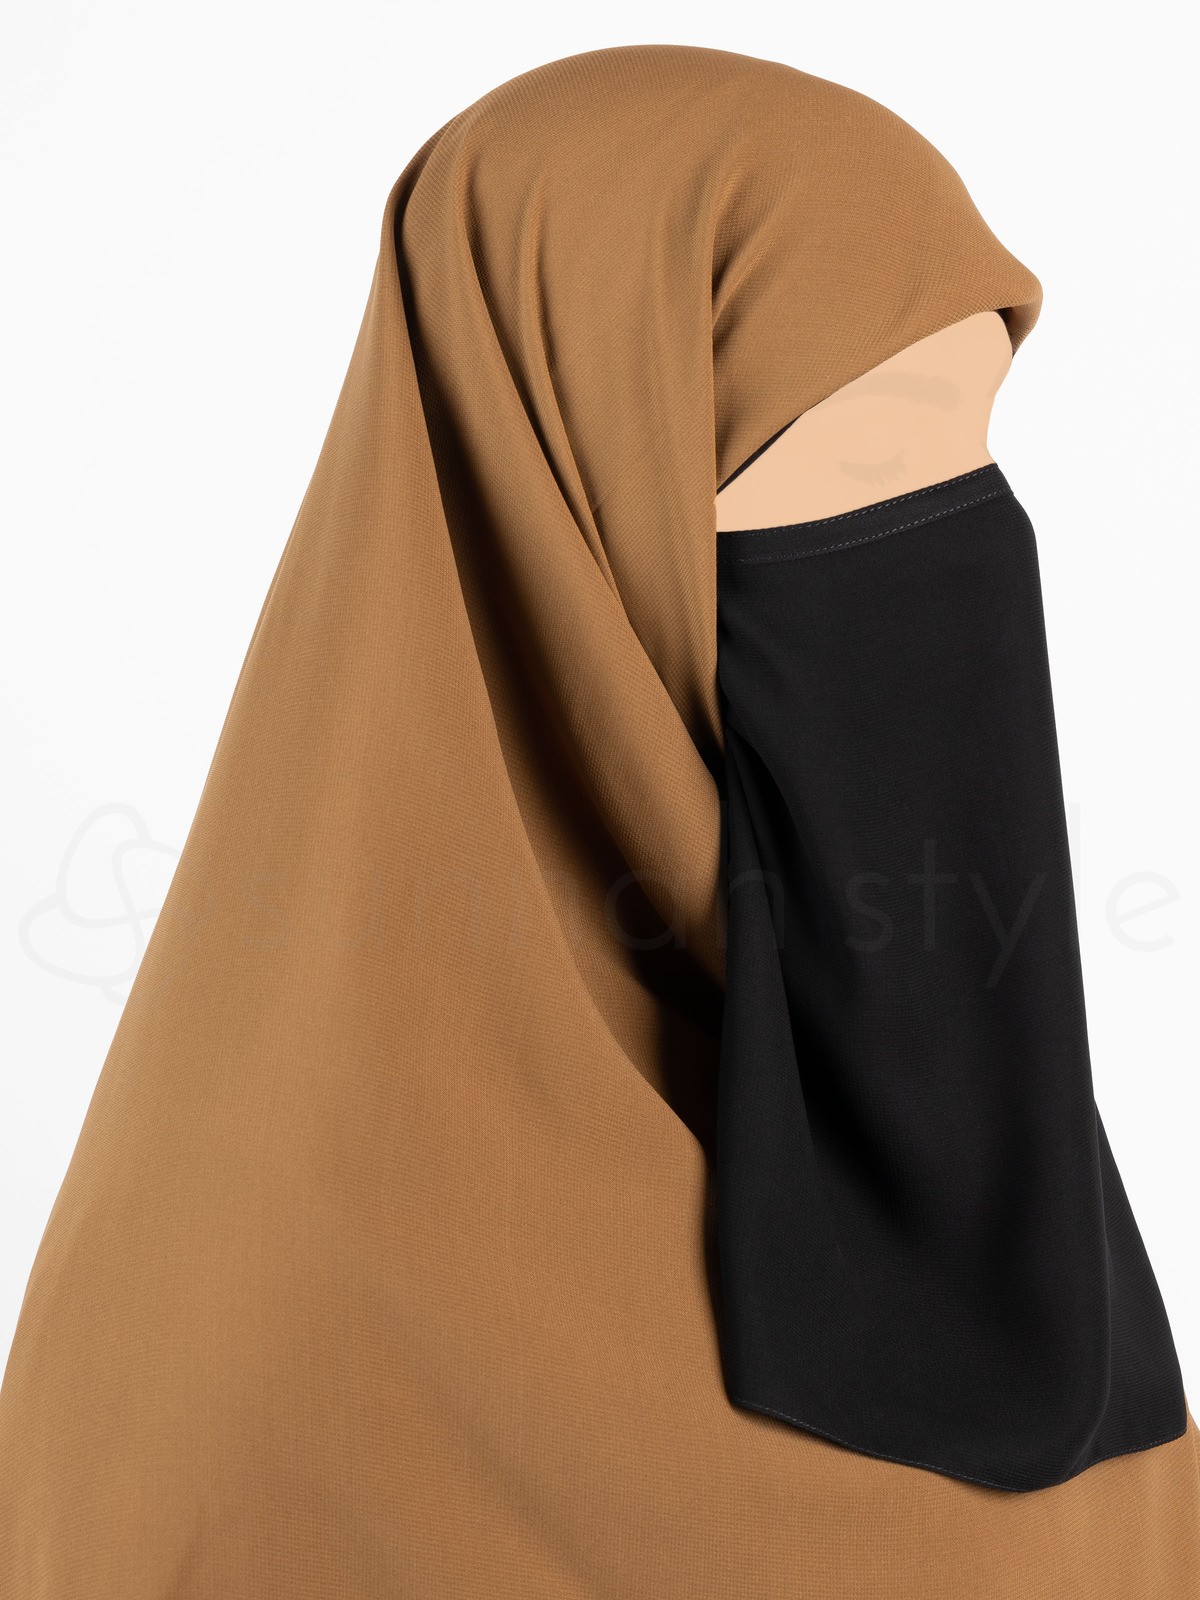 Sunnah Style - Tying Half Niqab (Black)